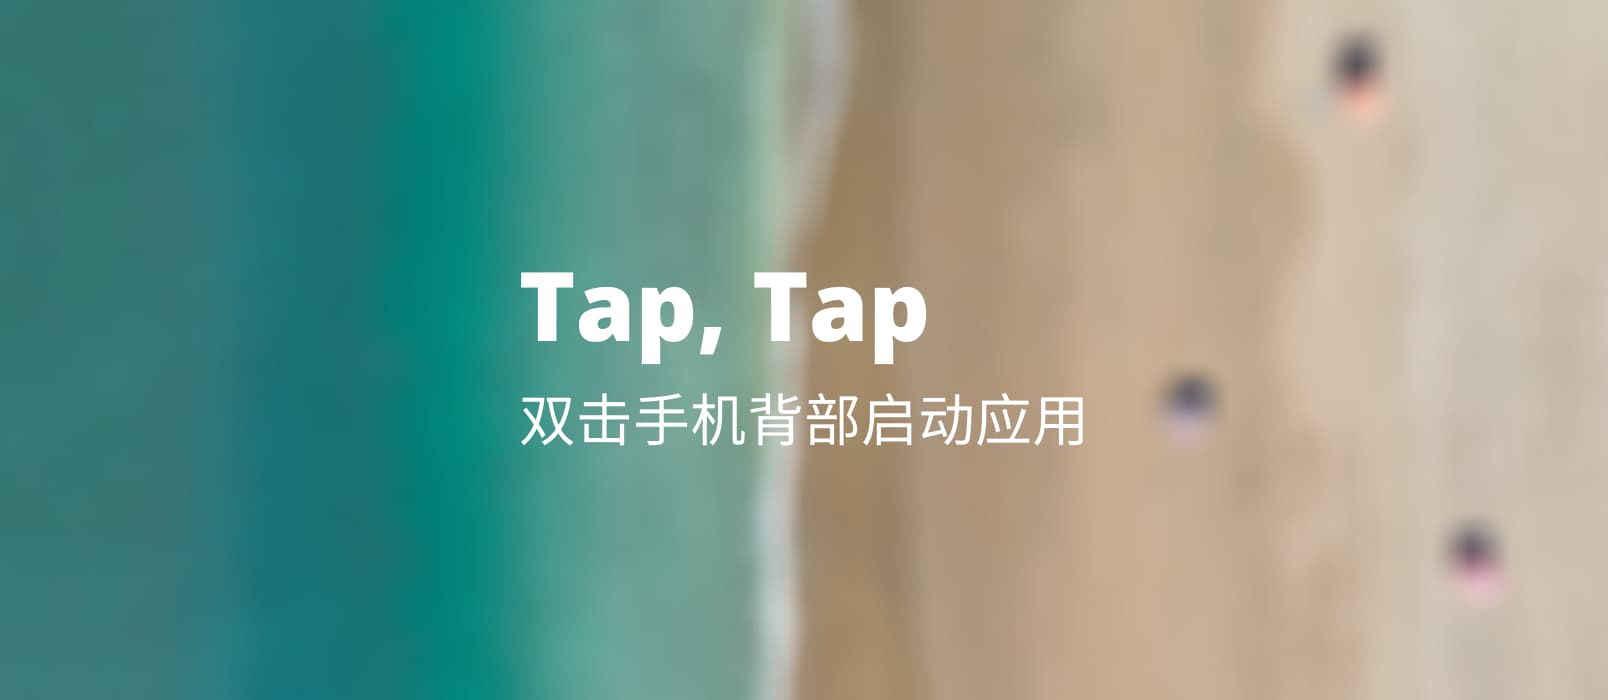 Tap, Tap - 双击背部启动 Android 应用，提前使用 iOS 14、Android 11 新功能 1